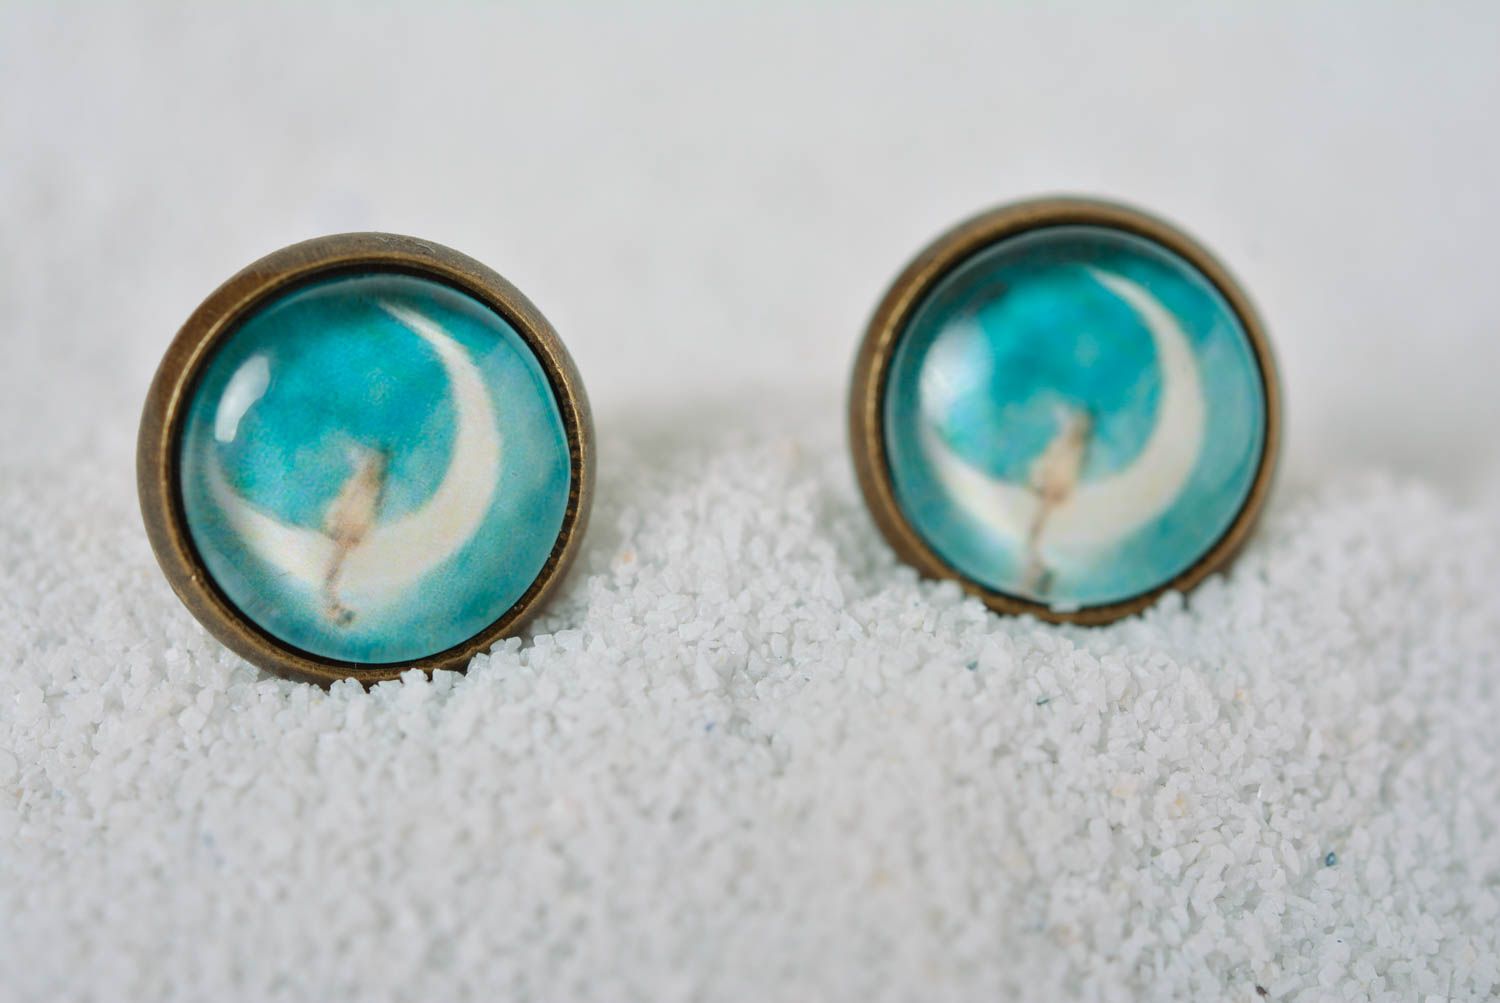 Handmade earrings stud earrings fashion jewelry designer accessories gift ideas photo 3